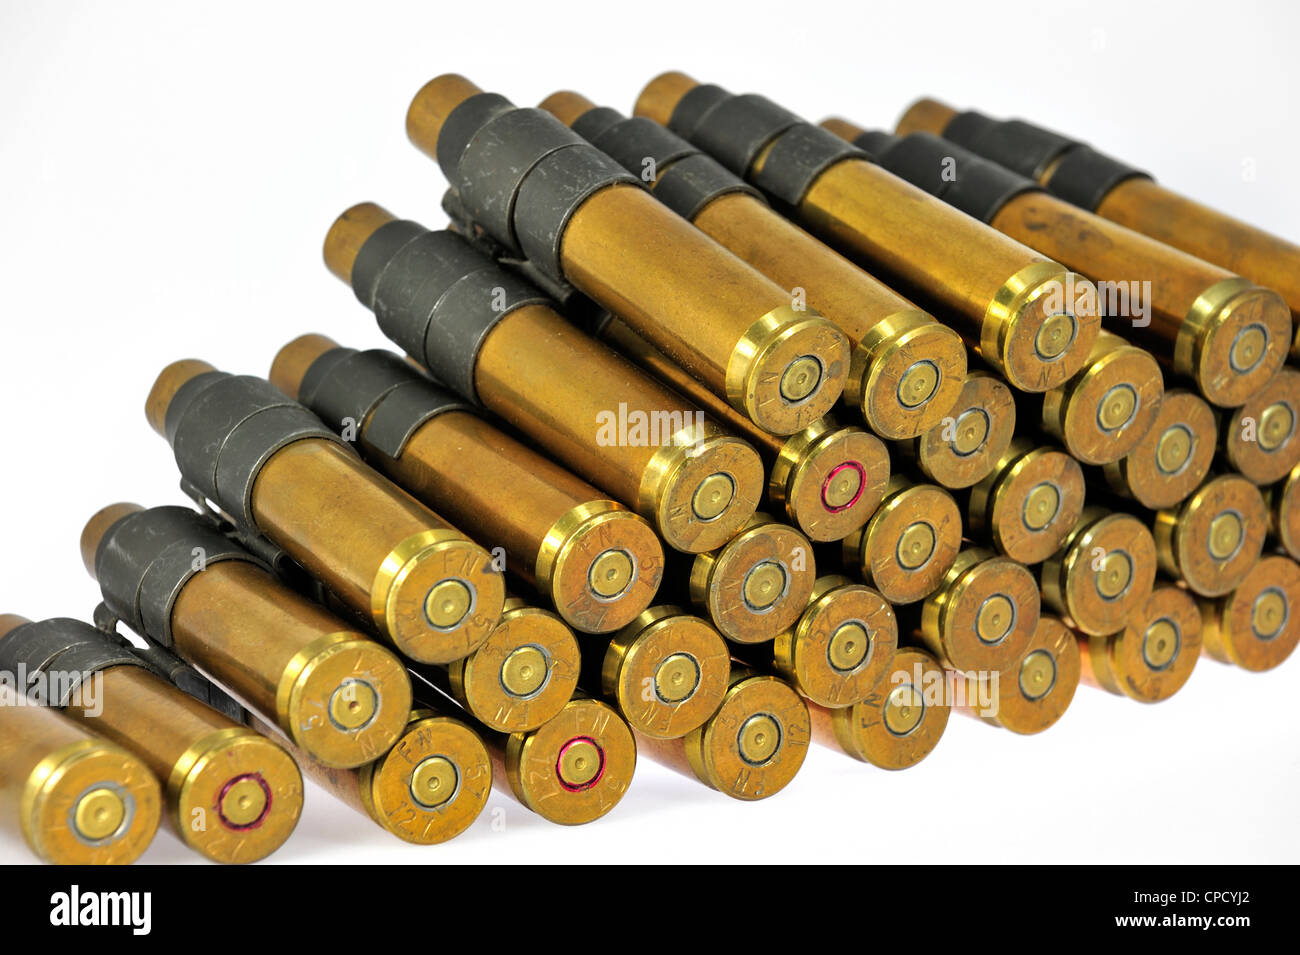 M2 Browning 50 Caliber Machine Gun Cartridges In Ammunition Belt Made By Fn Herstal Weapon Factory In Belgium Stock Photo Alamy